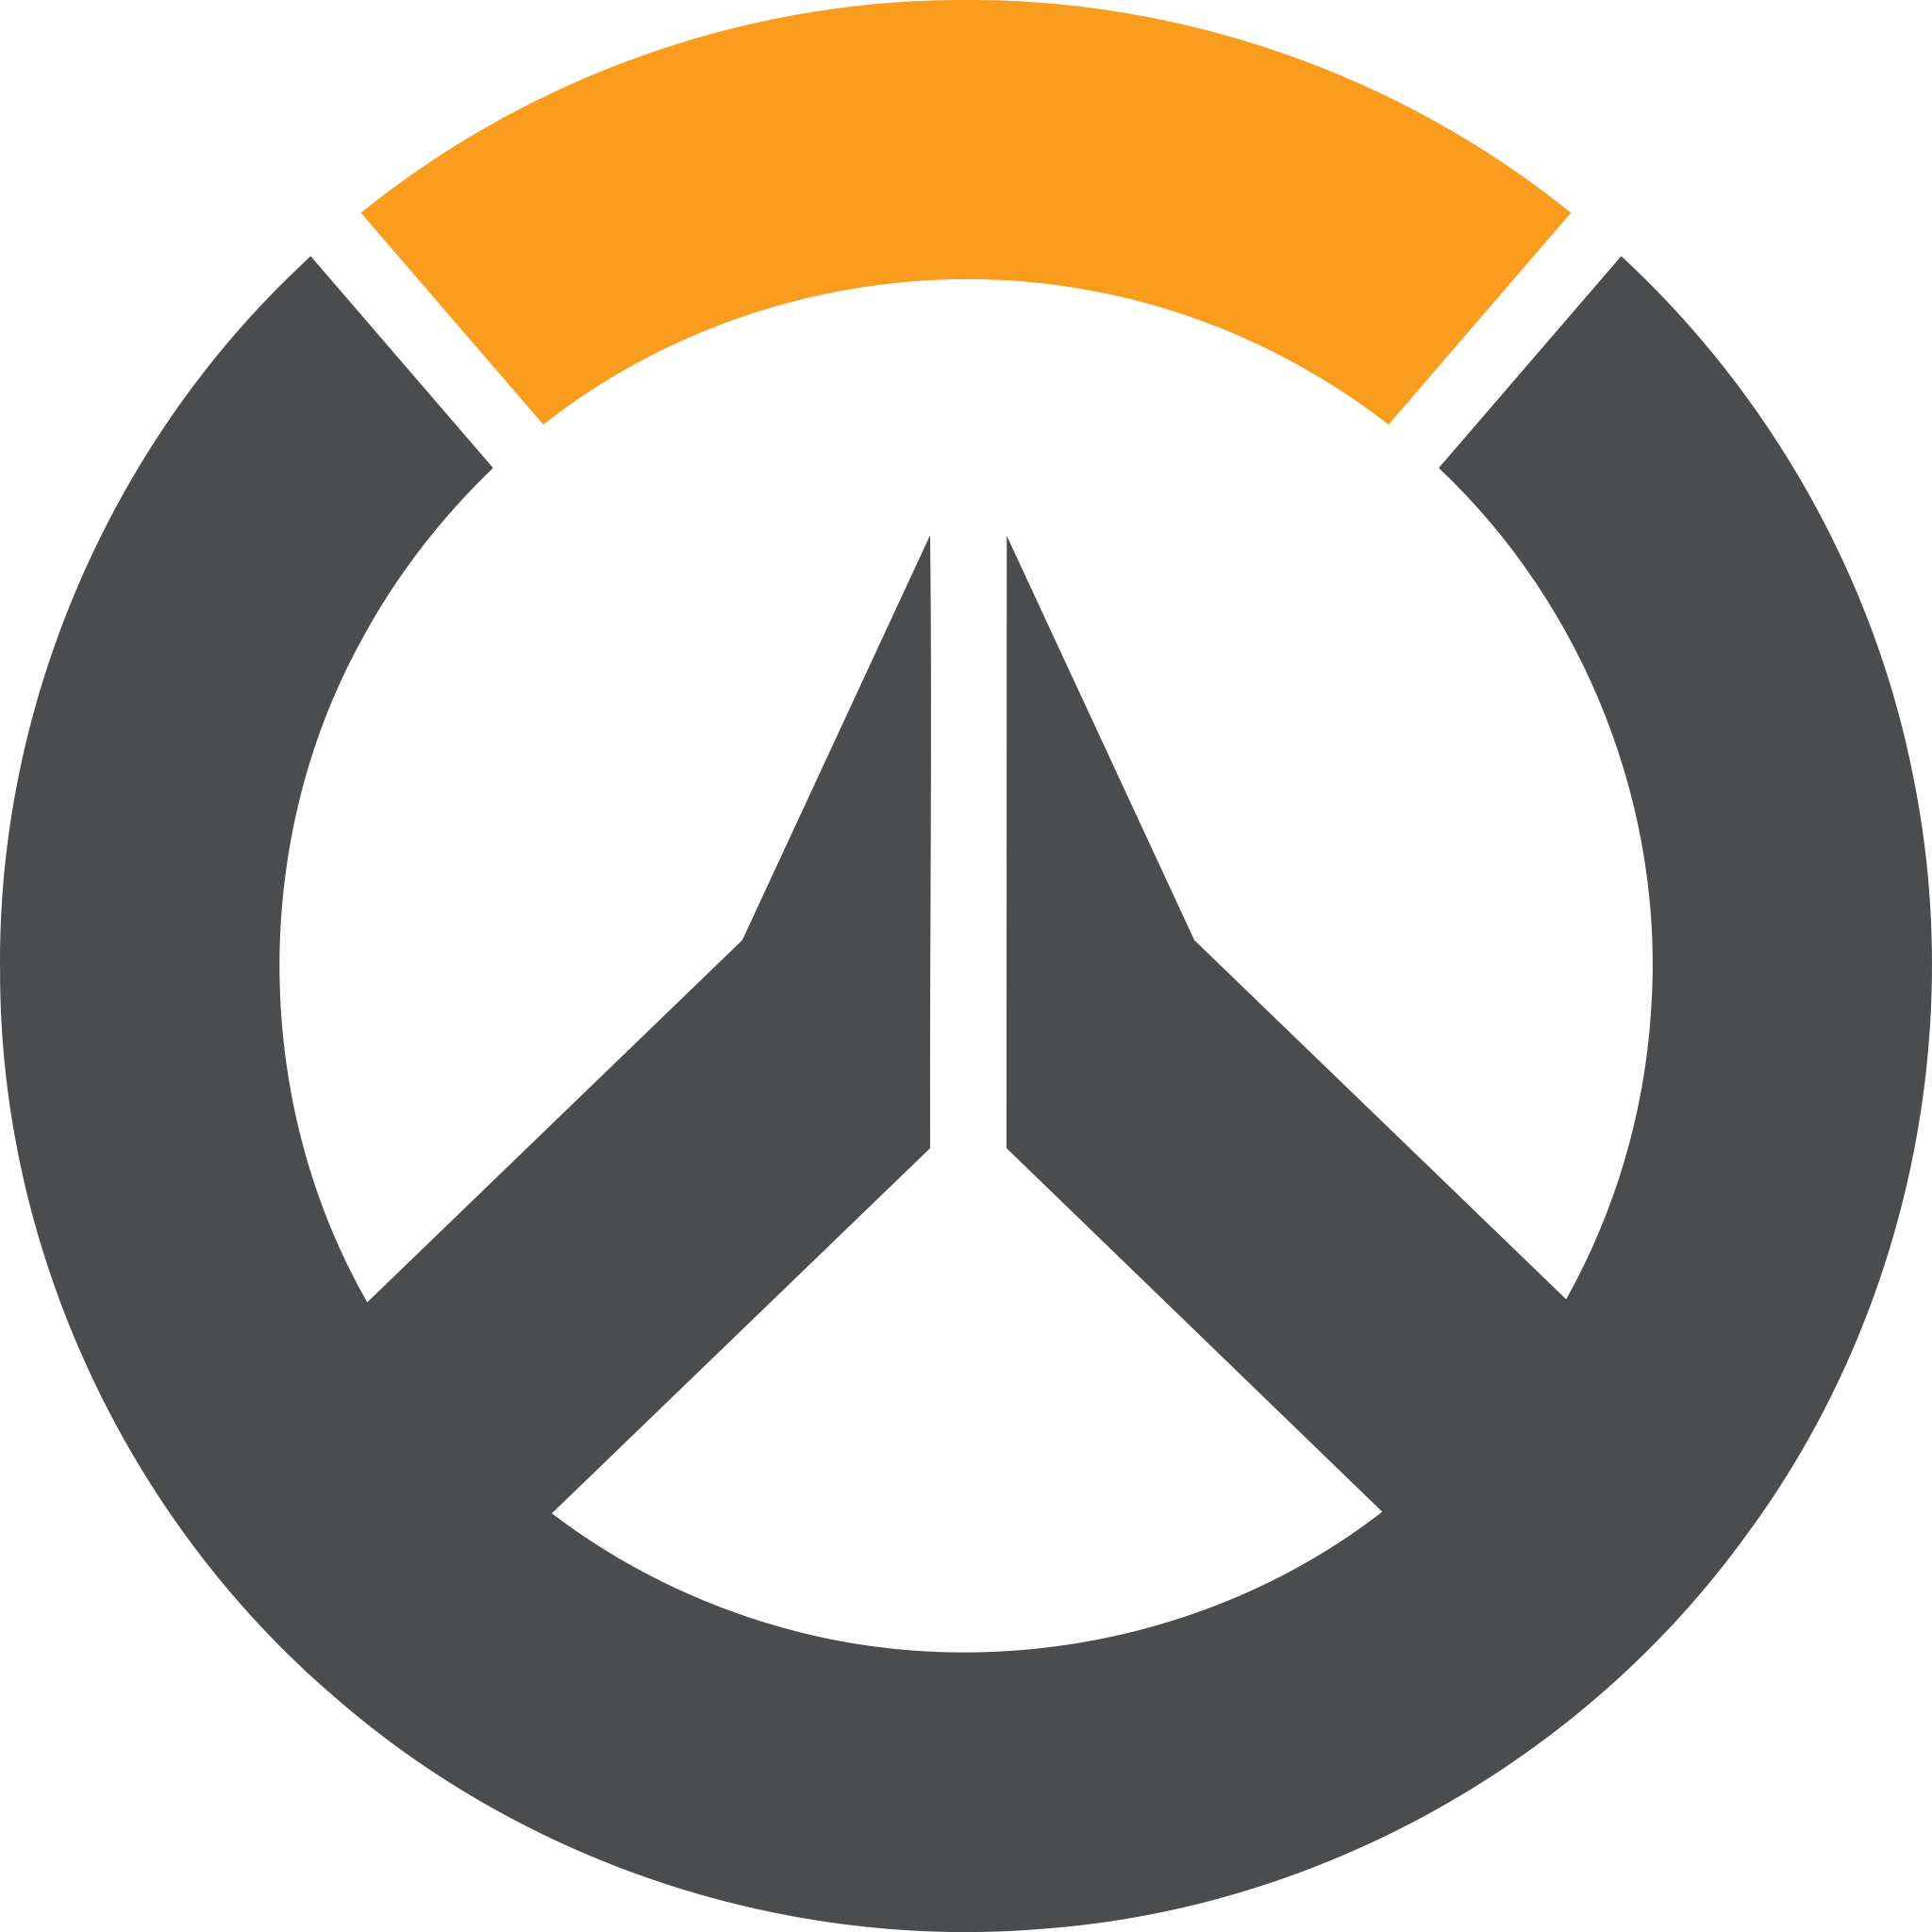 File:Overwatch circle logo.svg - Wikimedia Commons